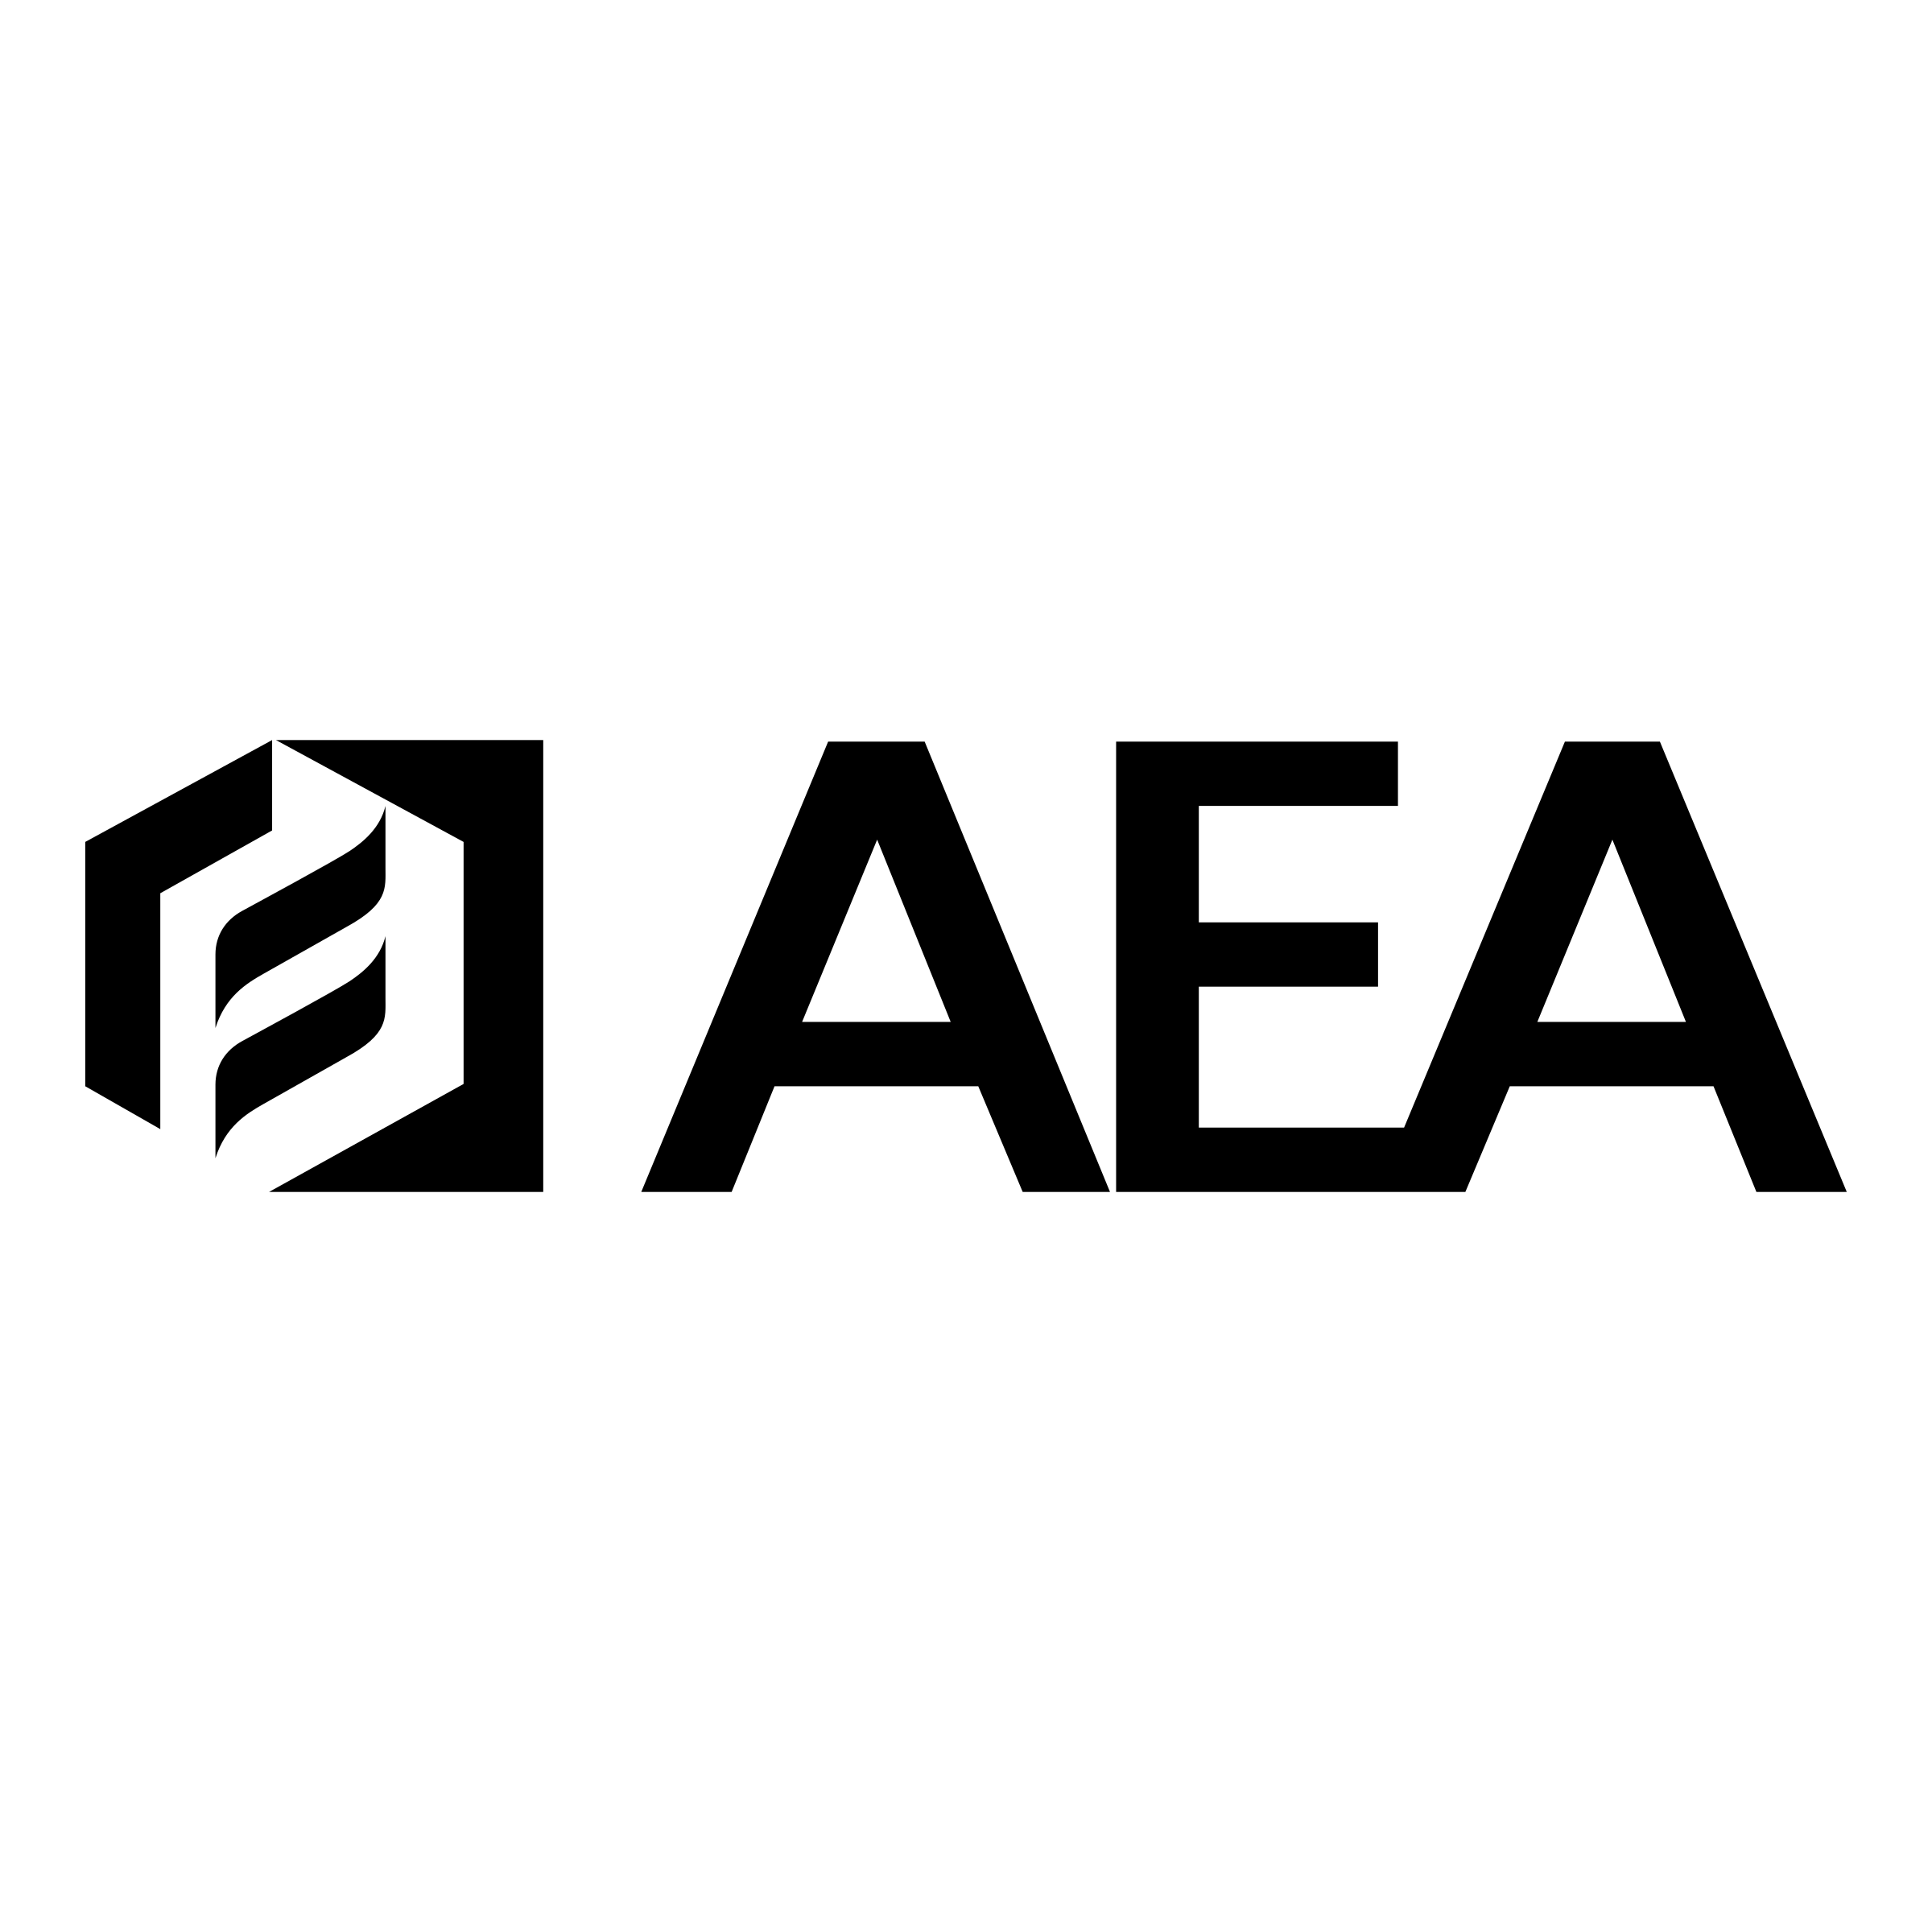 AEA Logo - AEA Logo PNG Transparent & SVG Vector